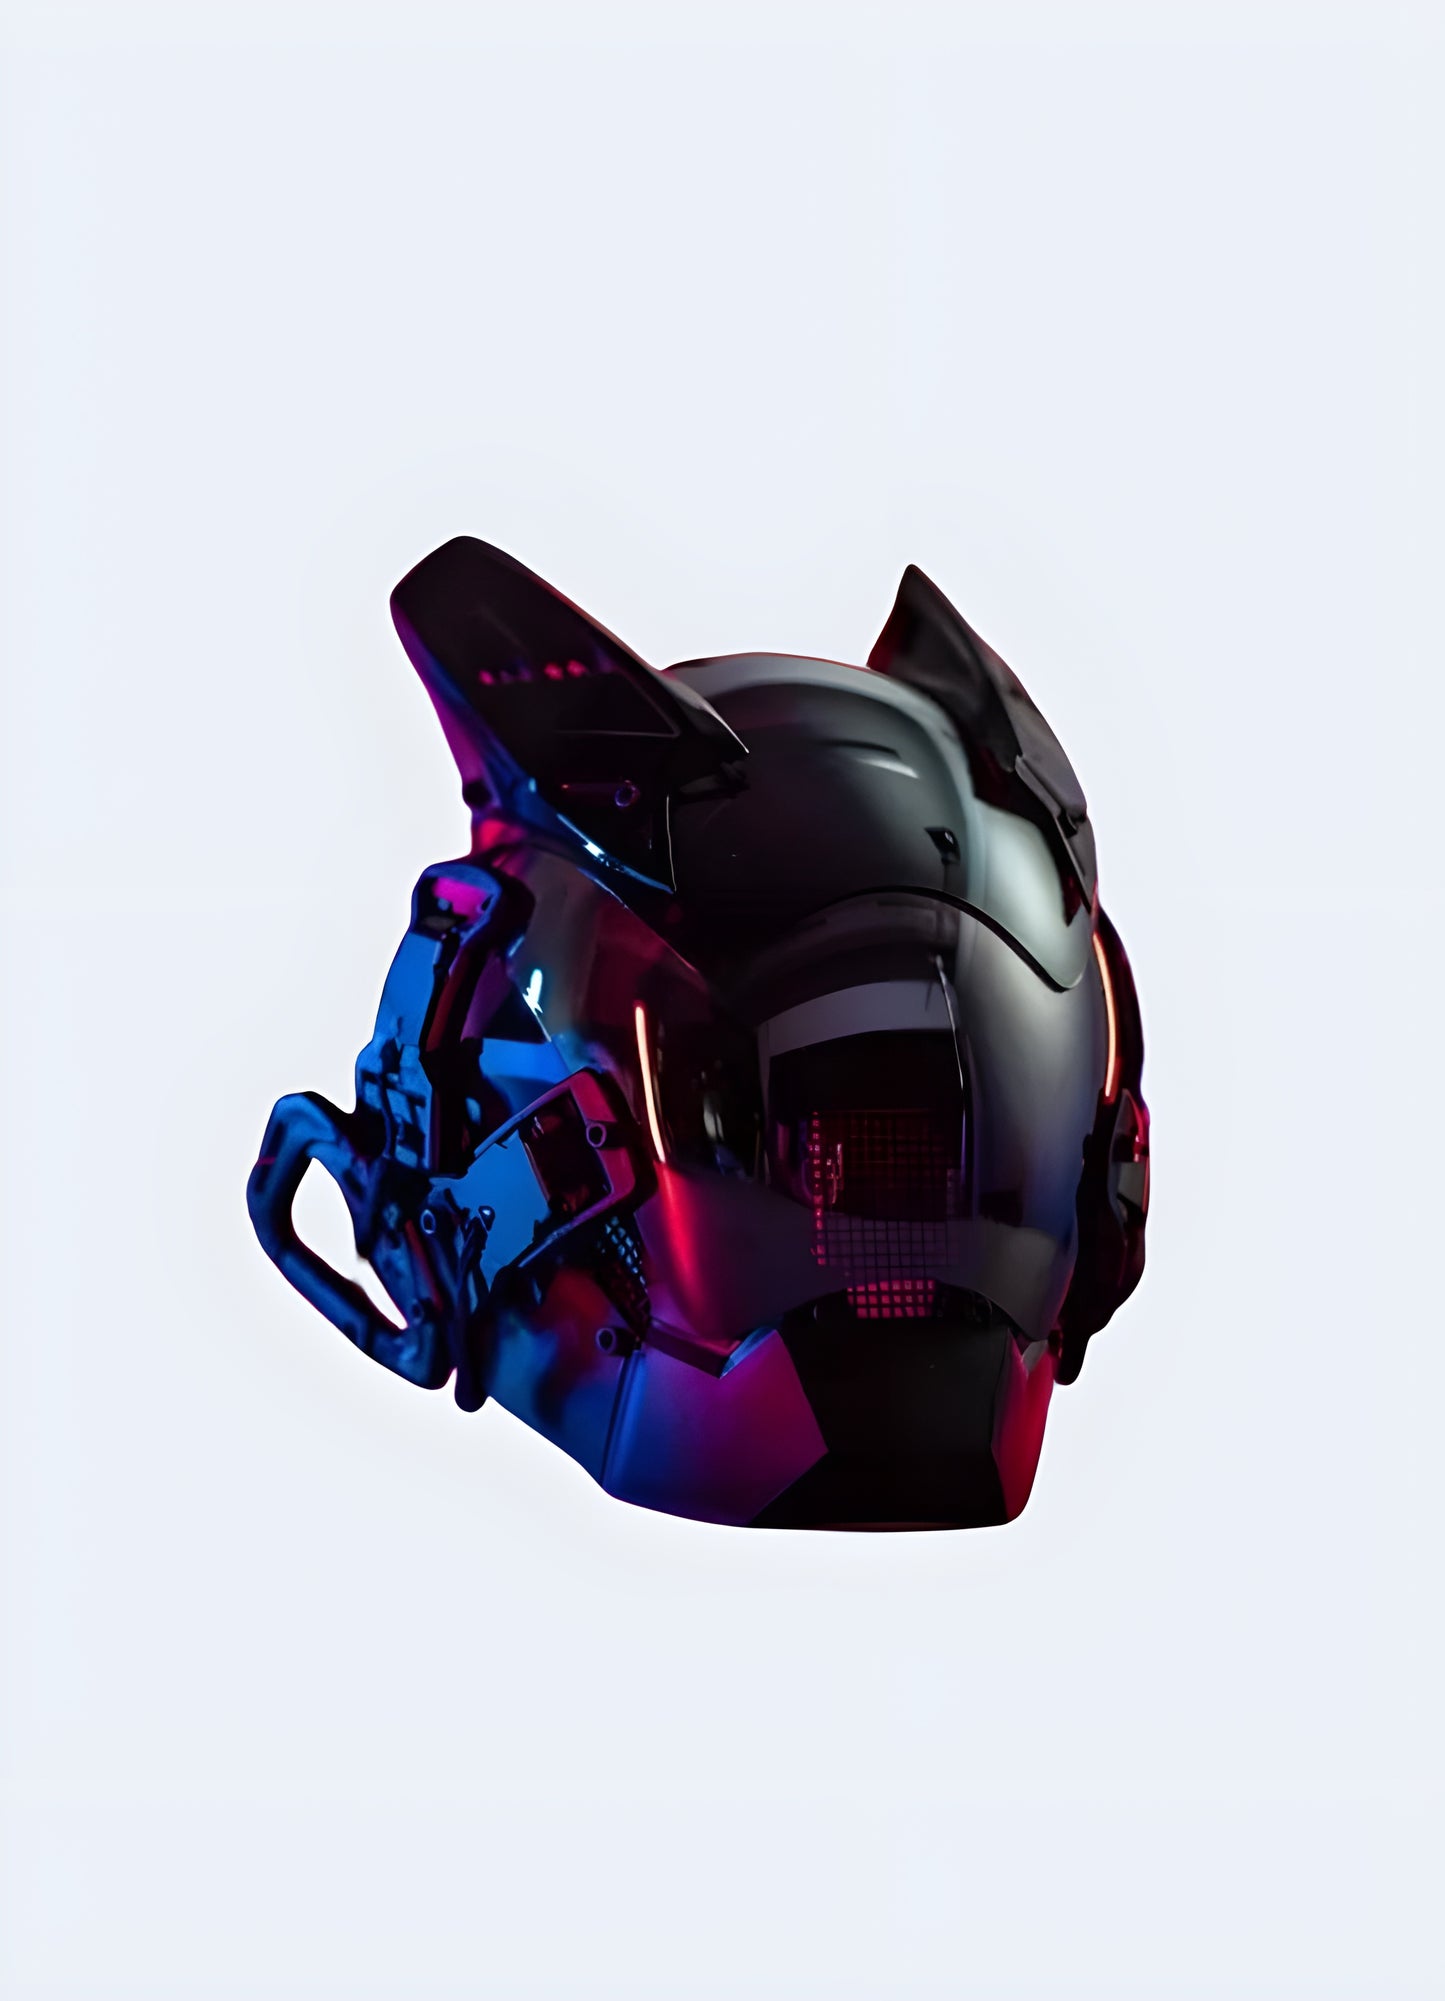 Cyberpunk futuristic helmet ventilation system keeps you cool.